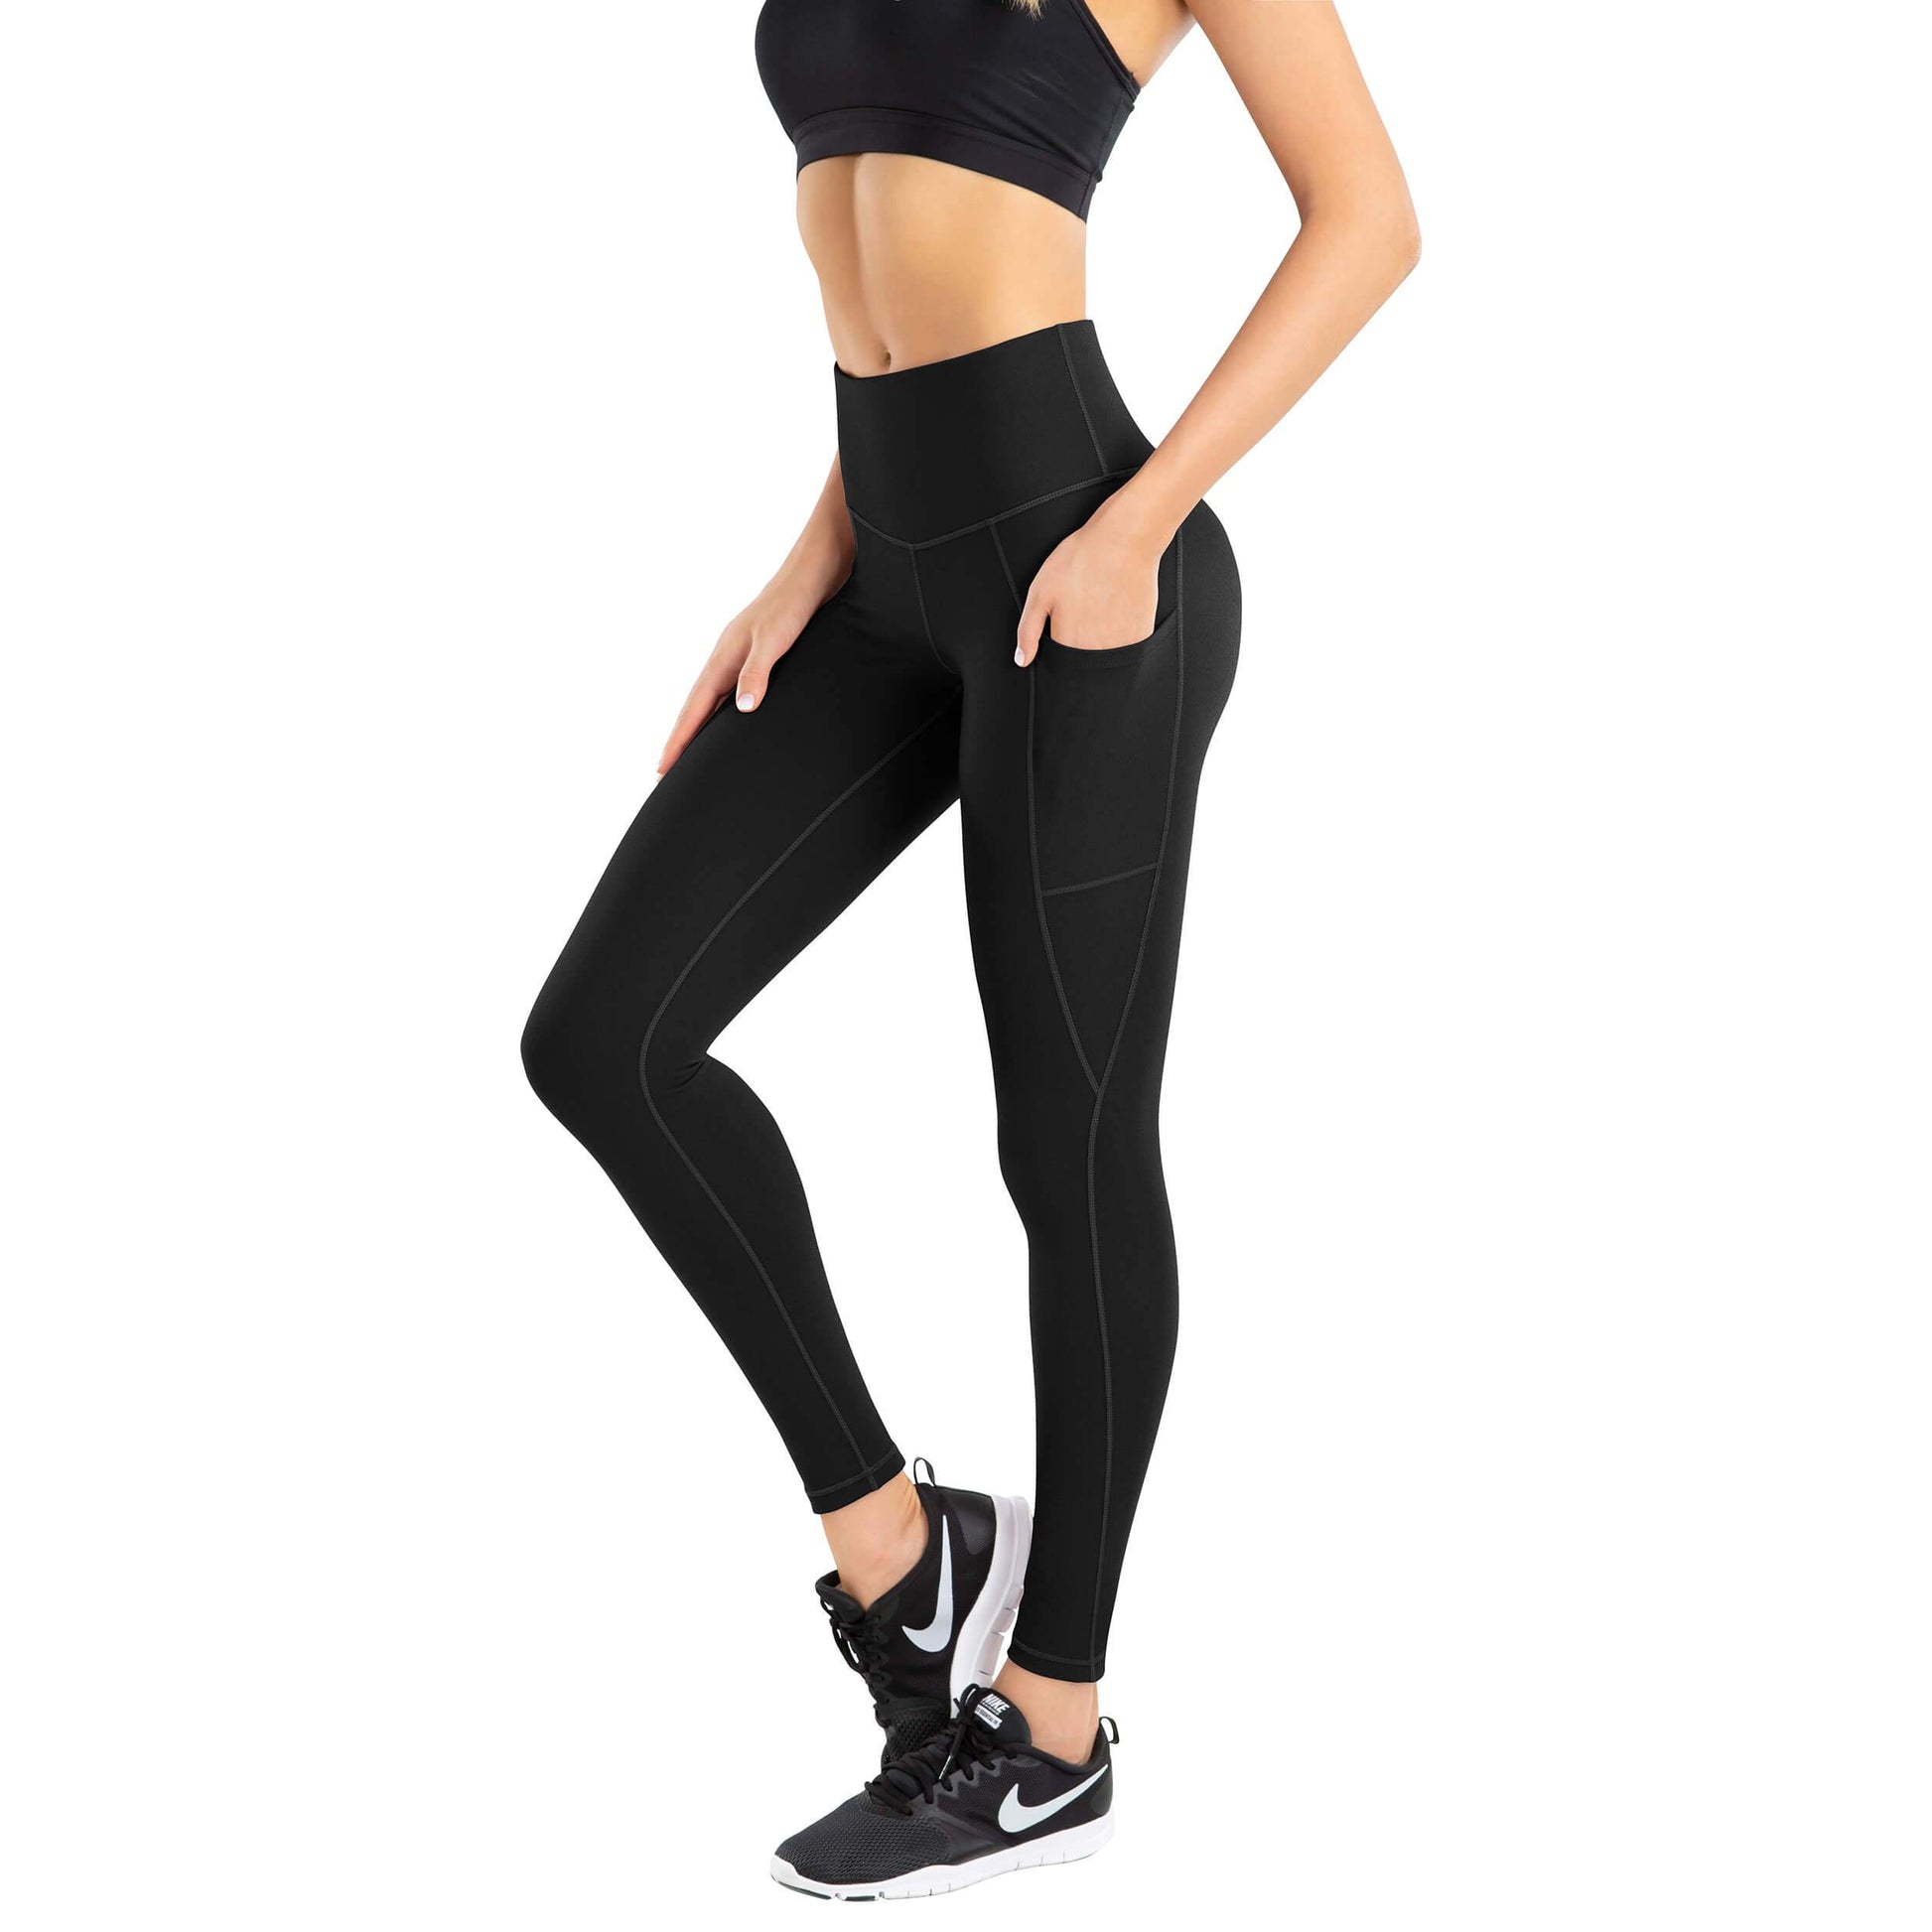 iKeep® High flexibility Yoga Legging with Pockets – ikeepyoga